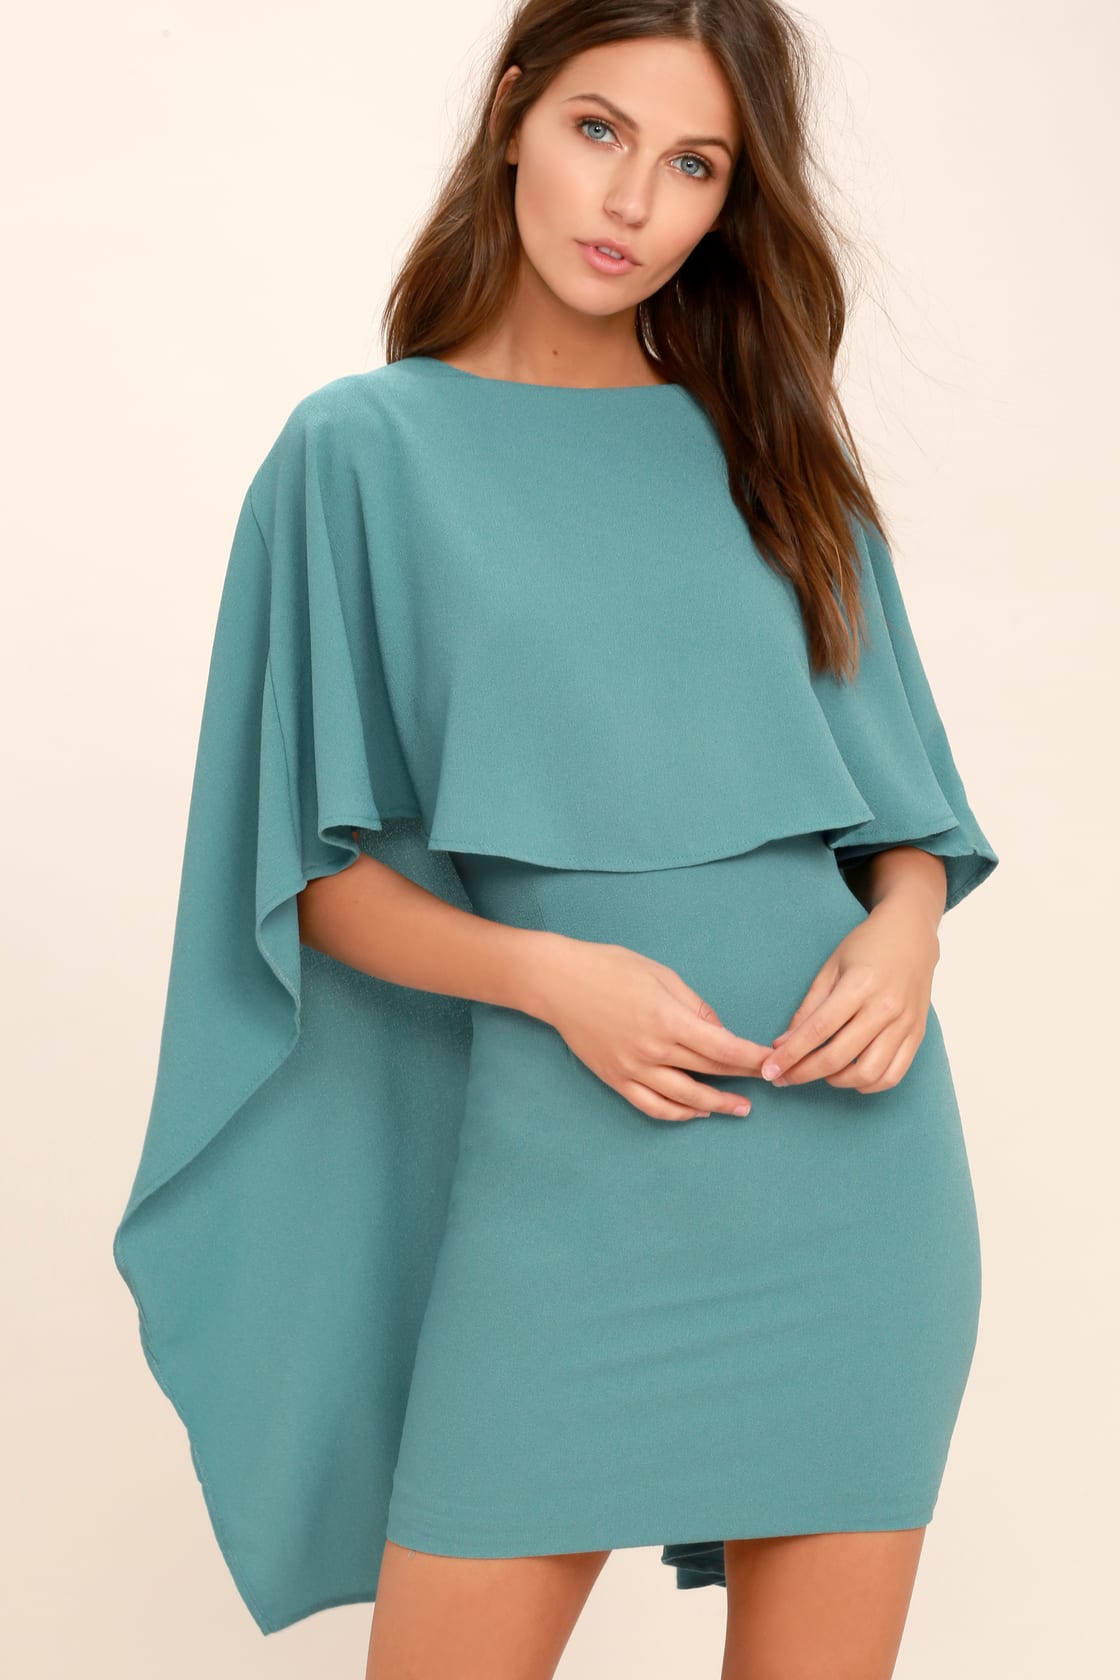 Turquoise Blue Dress - Backless Dress - Cape Dress - Lulus